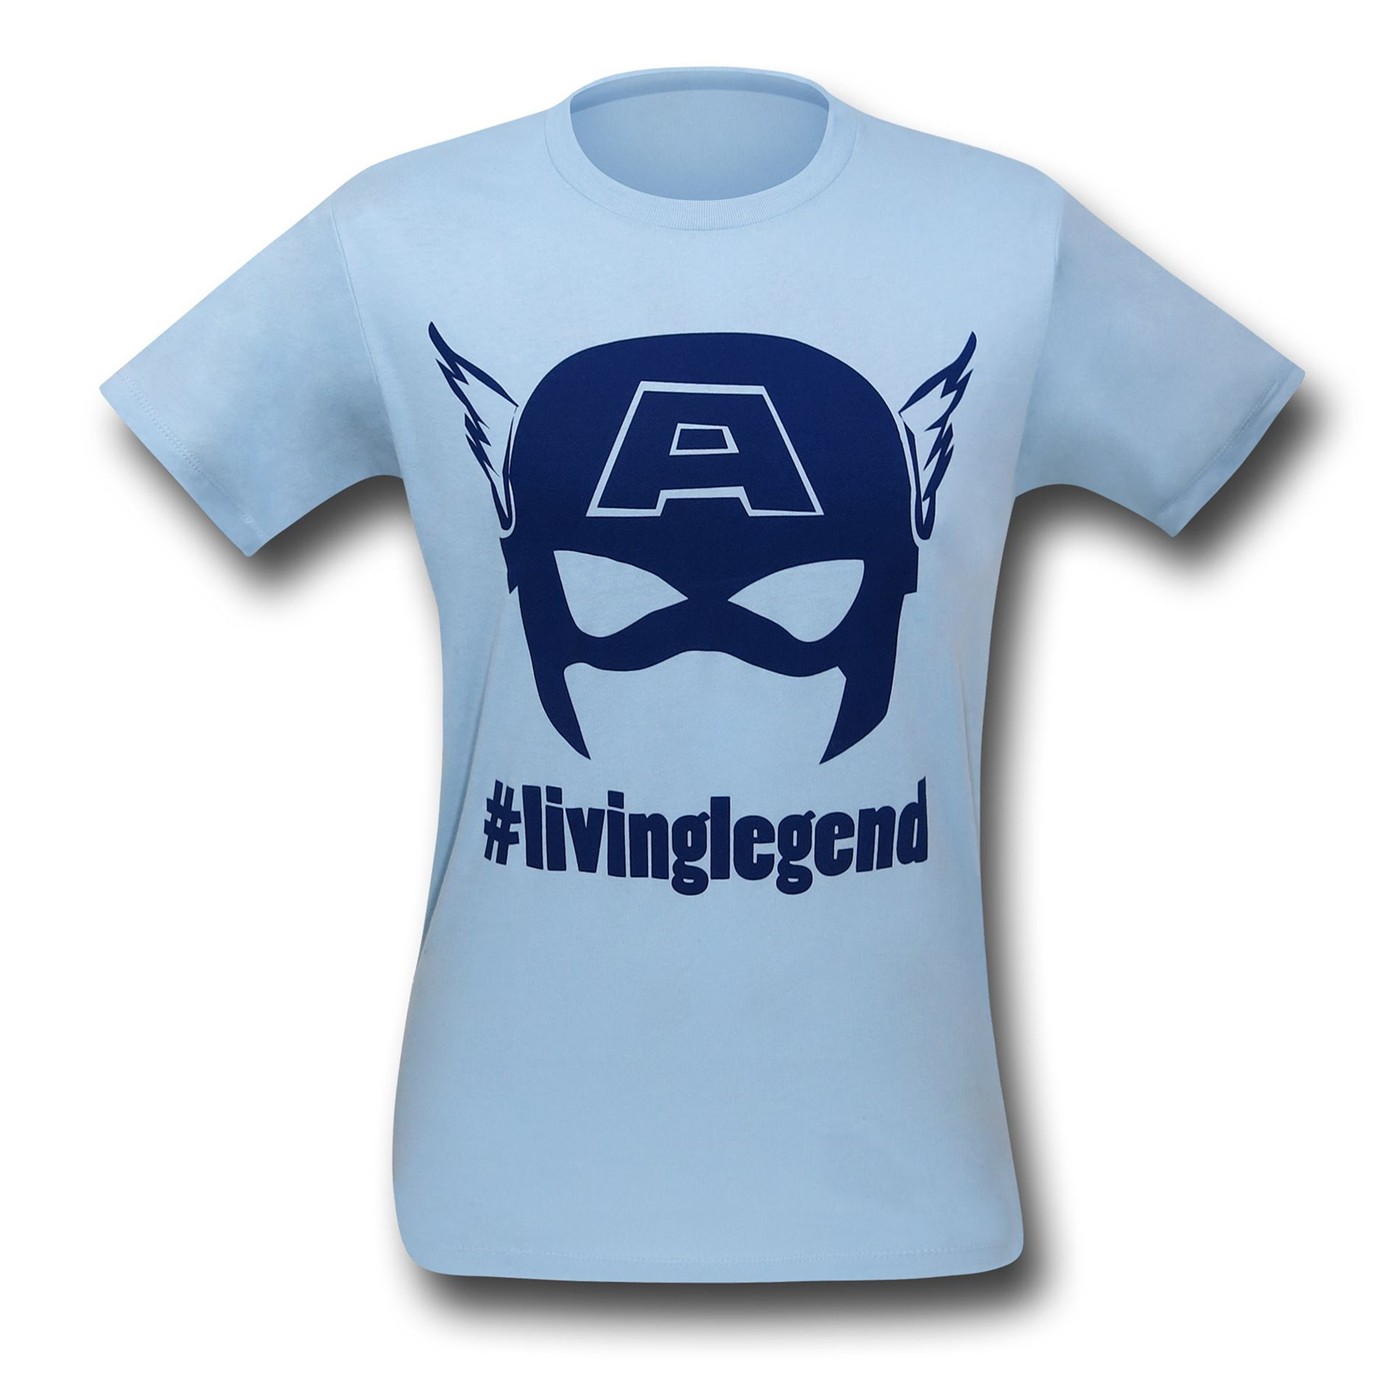 Captain America #livinglegend 30 Single T-Shirt